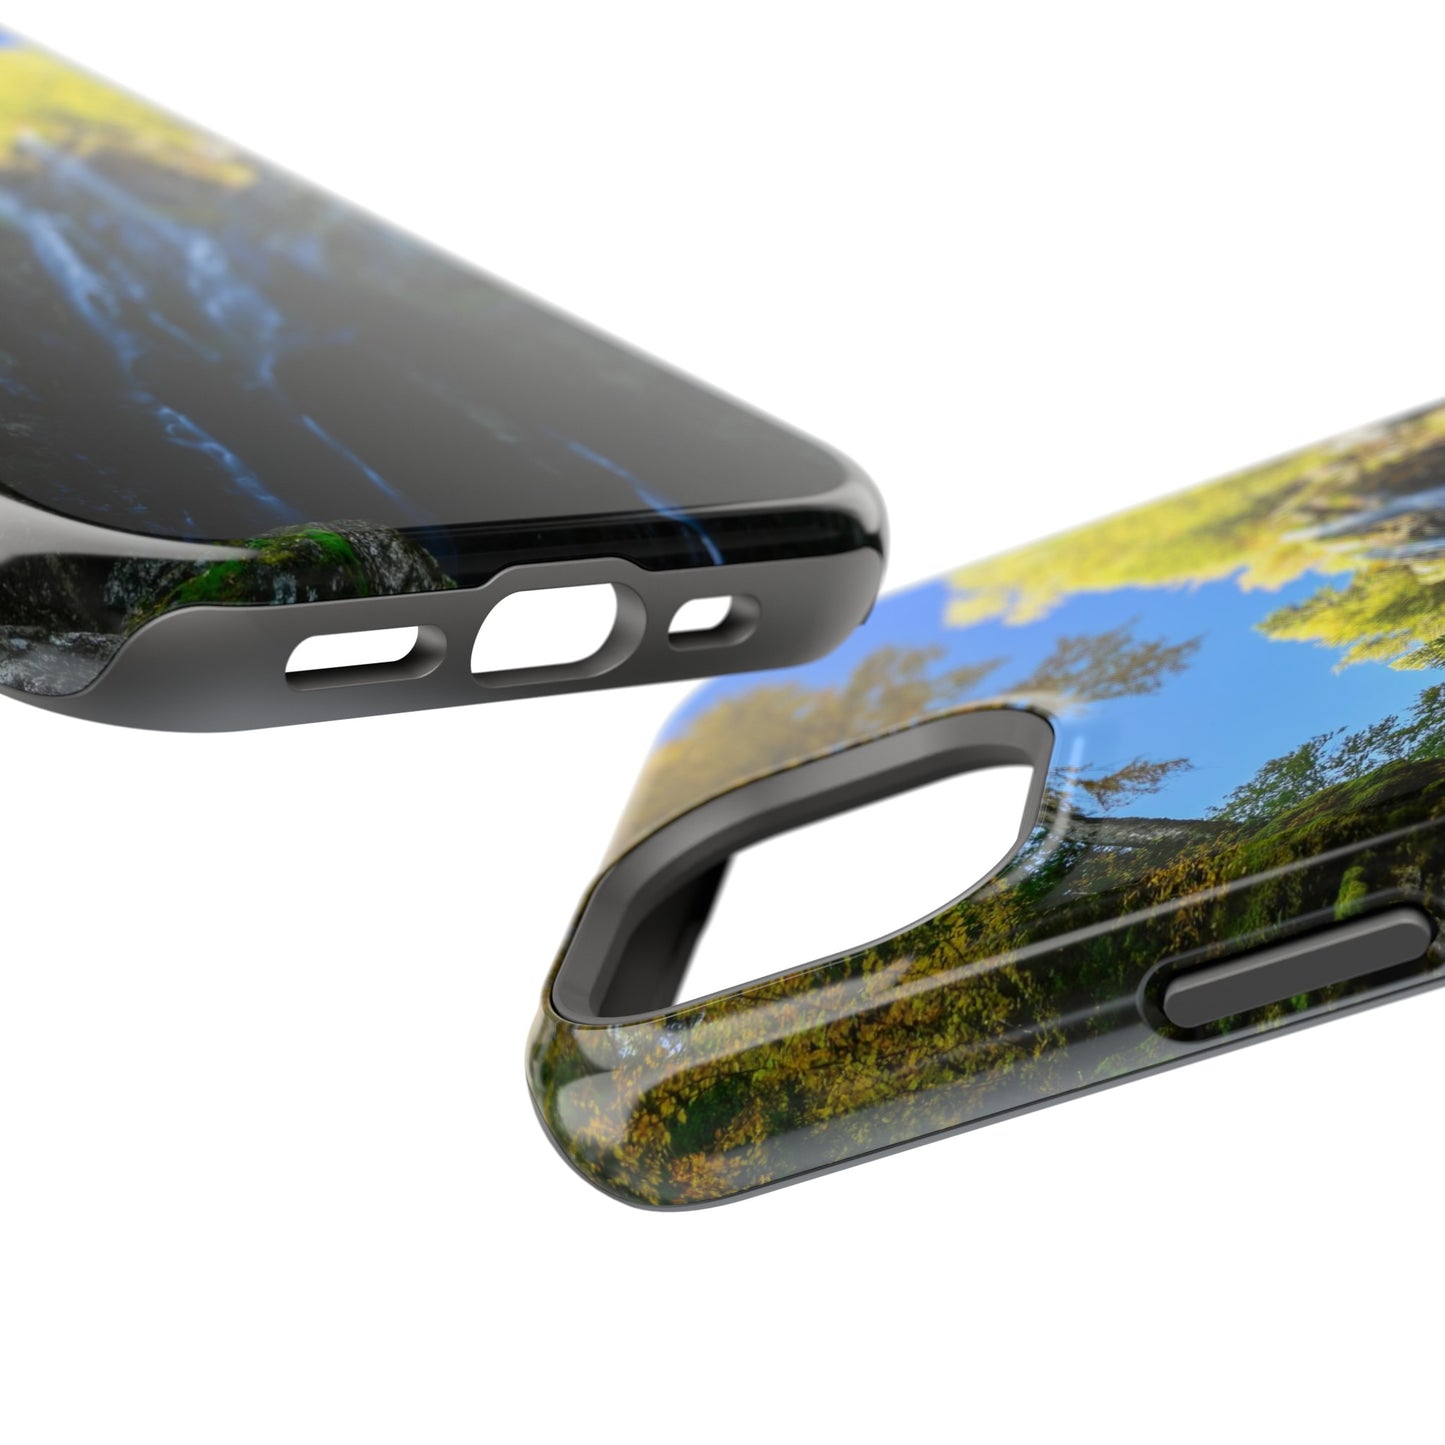 MagSafe Impact Resistant Phone Case - Rainbow Falls